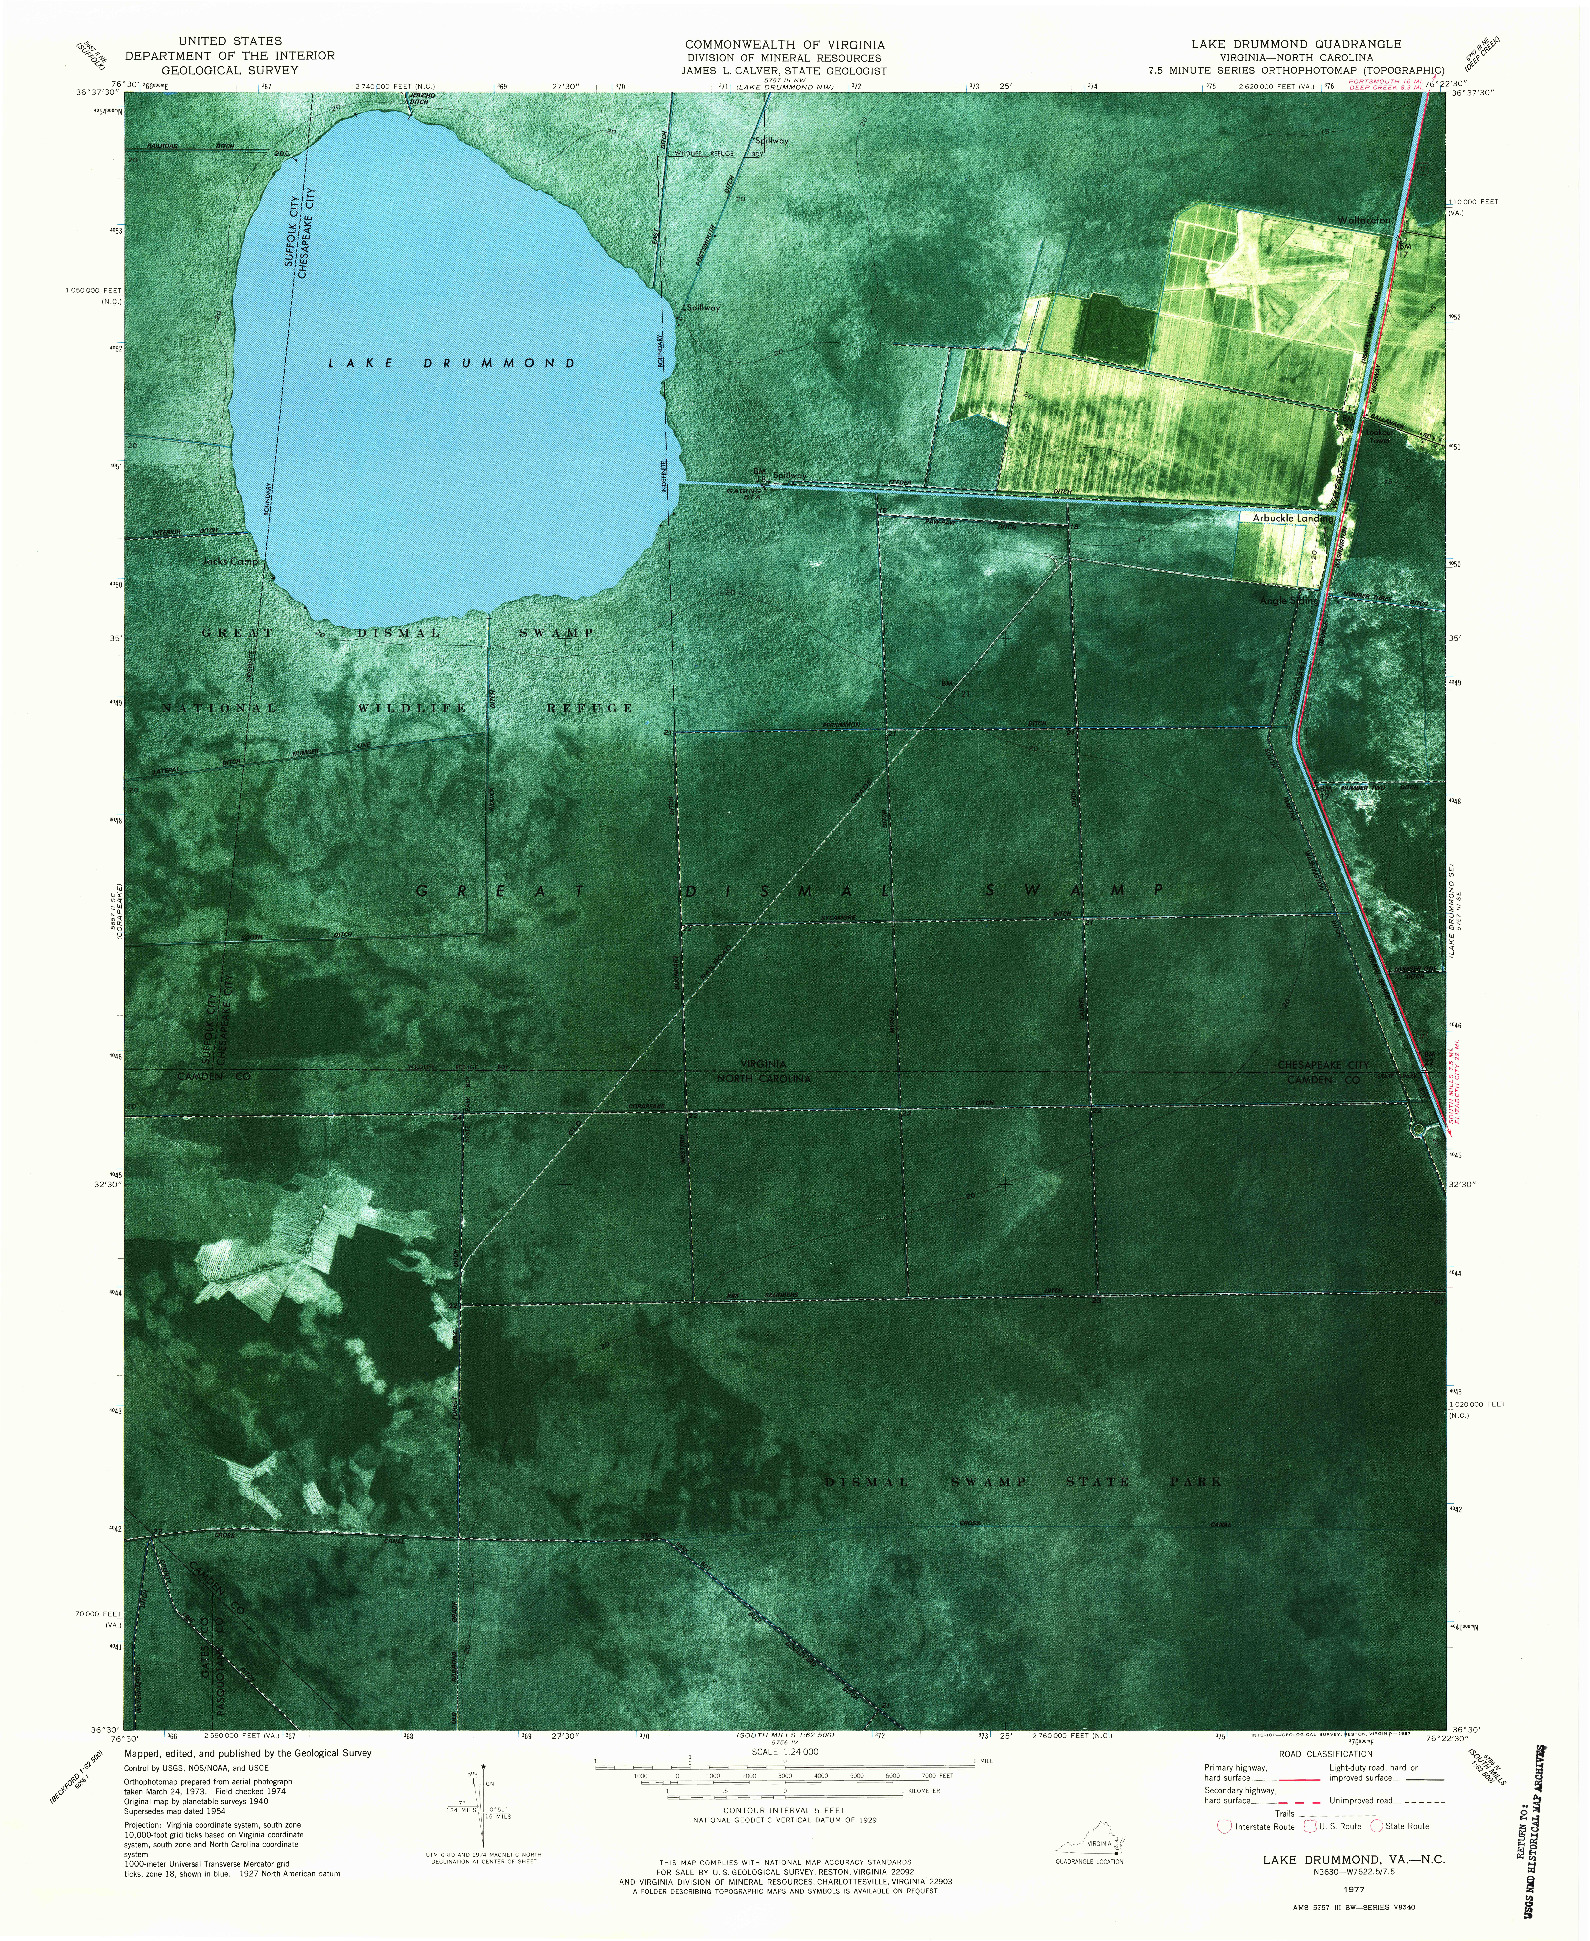 USGS 1:24000-SCALE QUADRANGLE FOR LAKE DRUMMOND, VA 1977